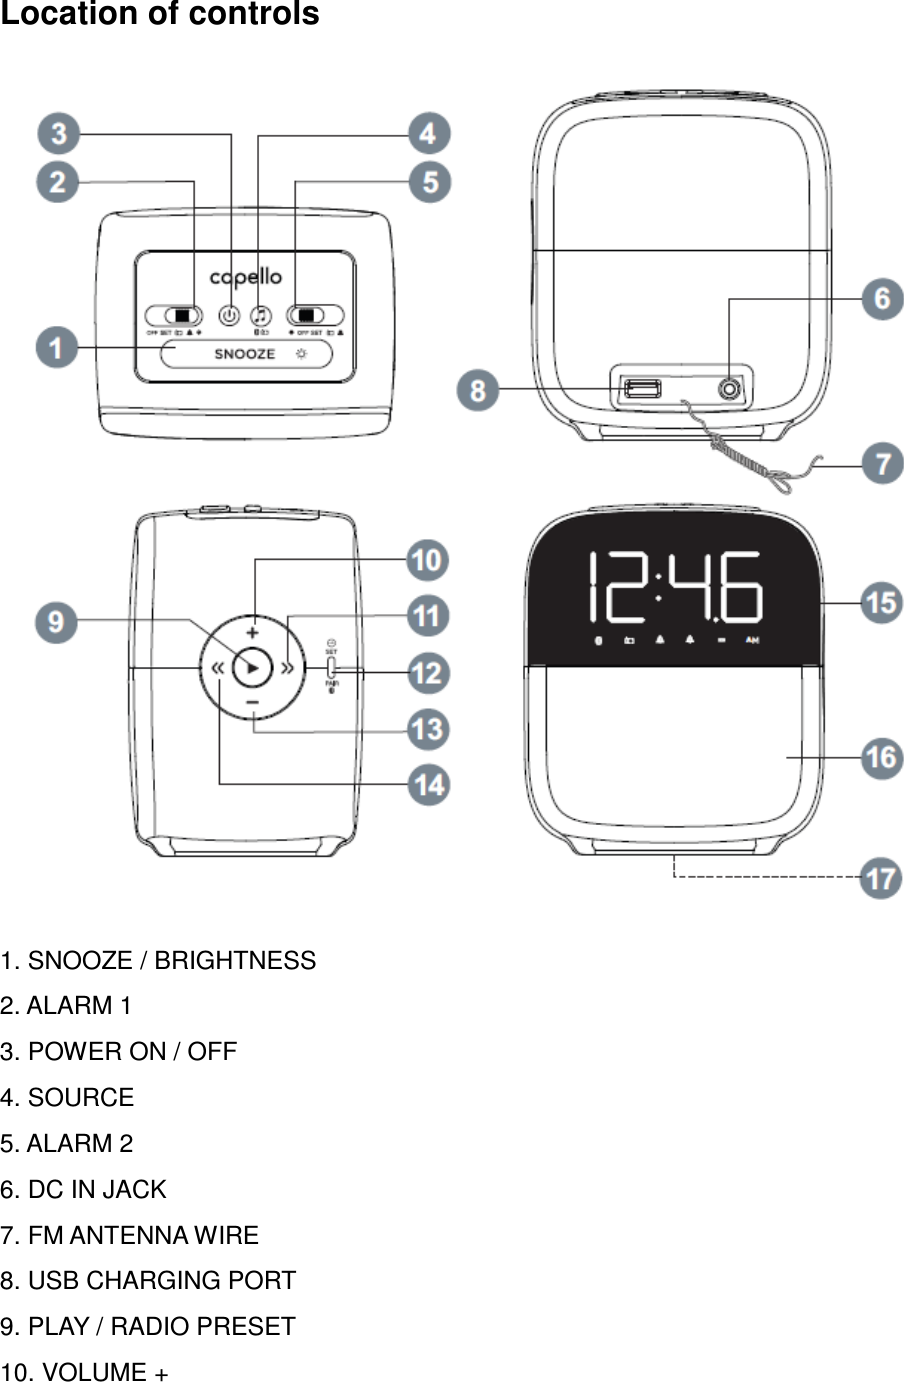 Capello Alarm Clock Wood User Manual